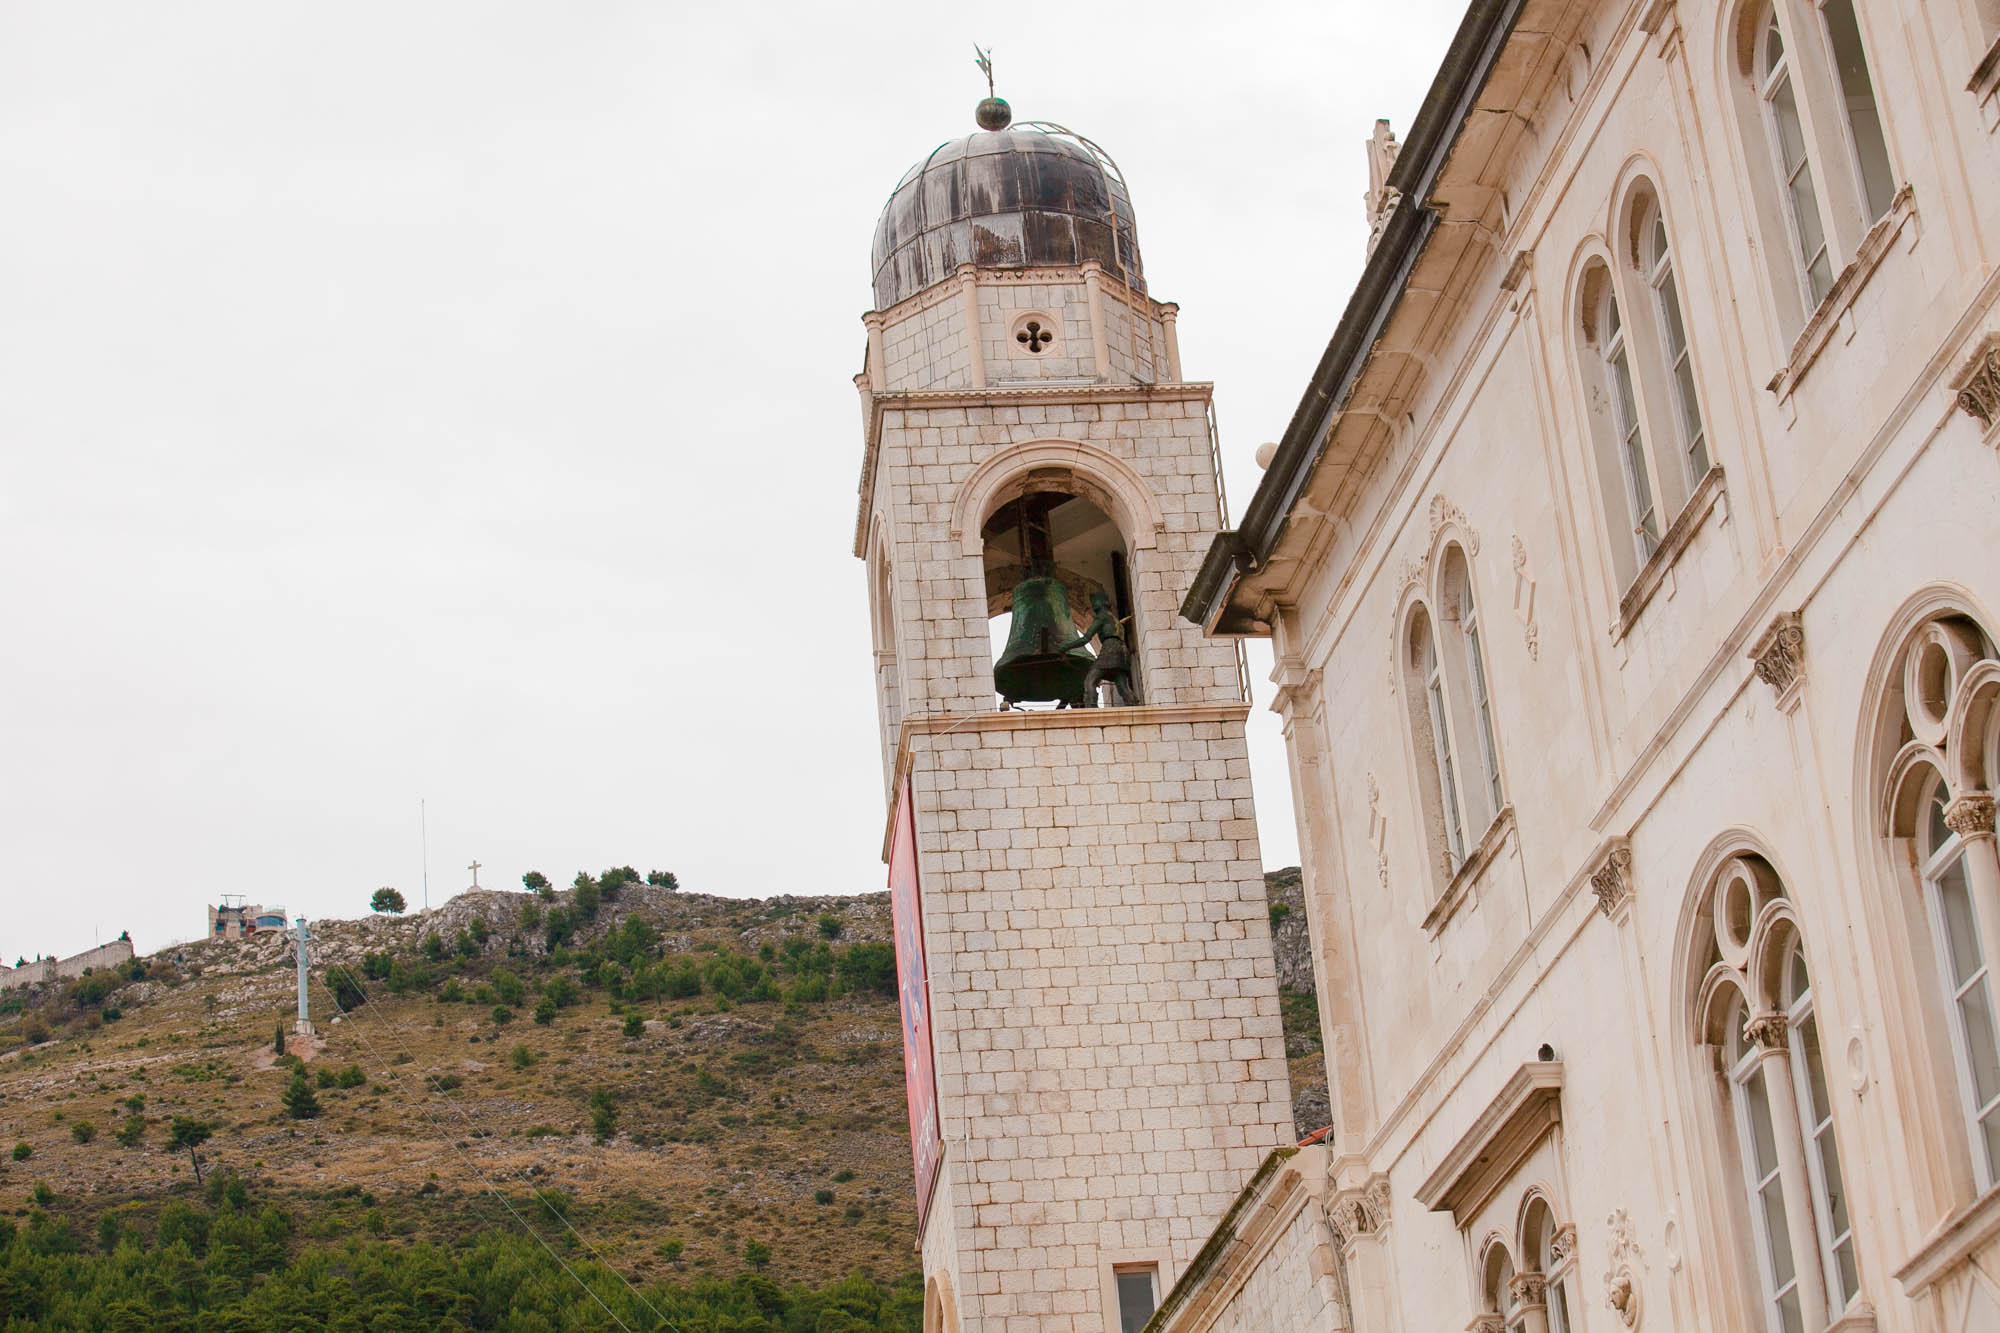 Old Dubrovnik bell tower